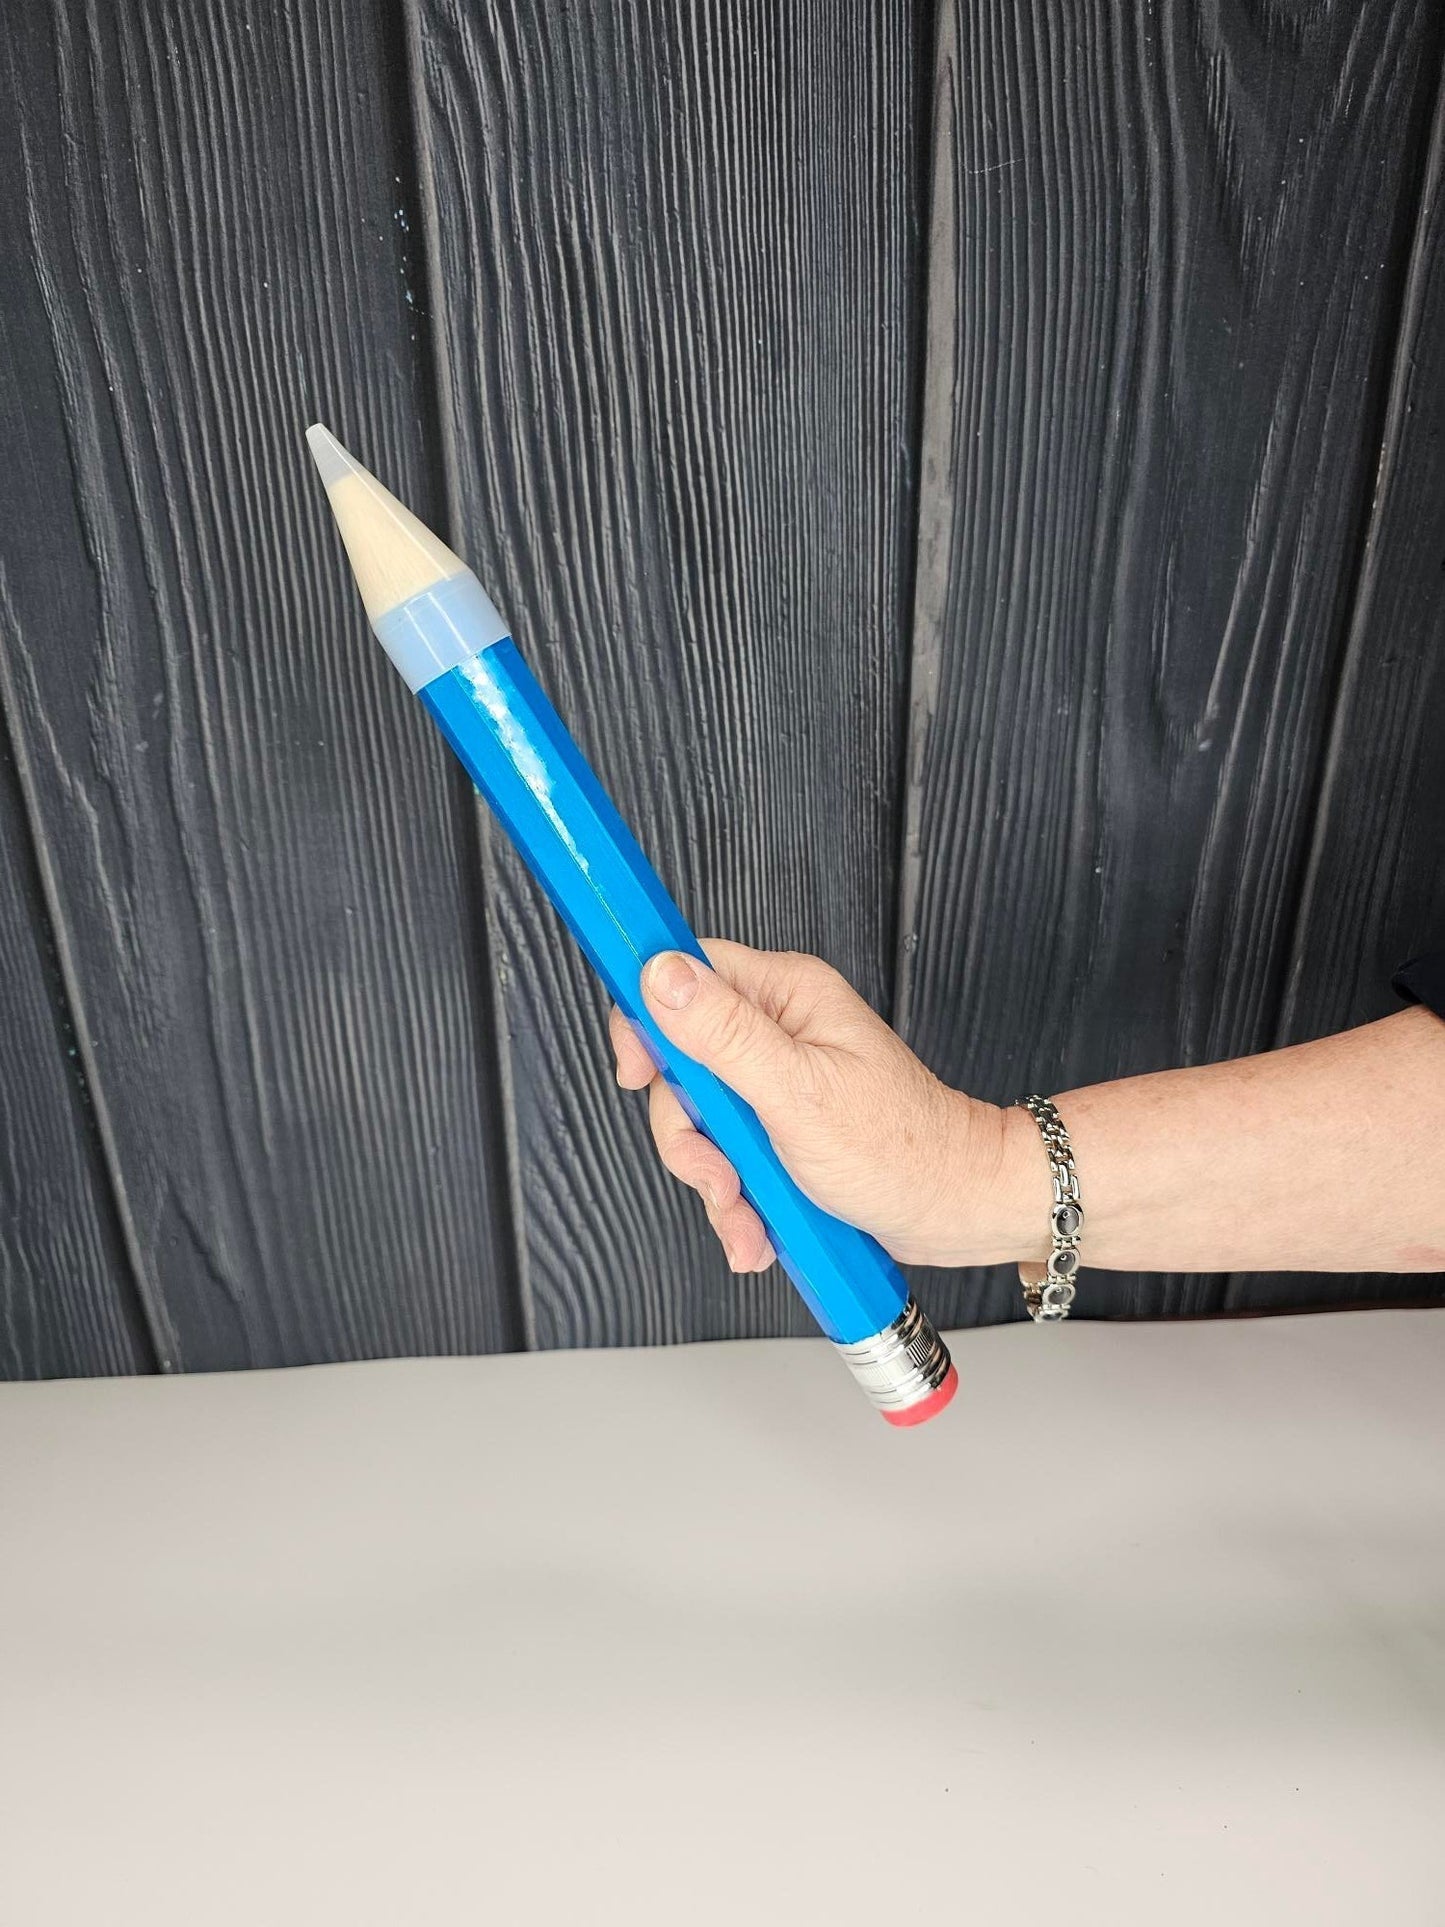 Extra Large Foot Long Big Pencil with Eraser 